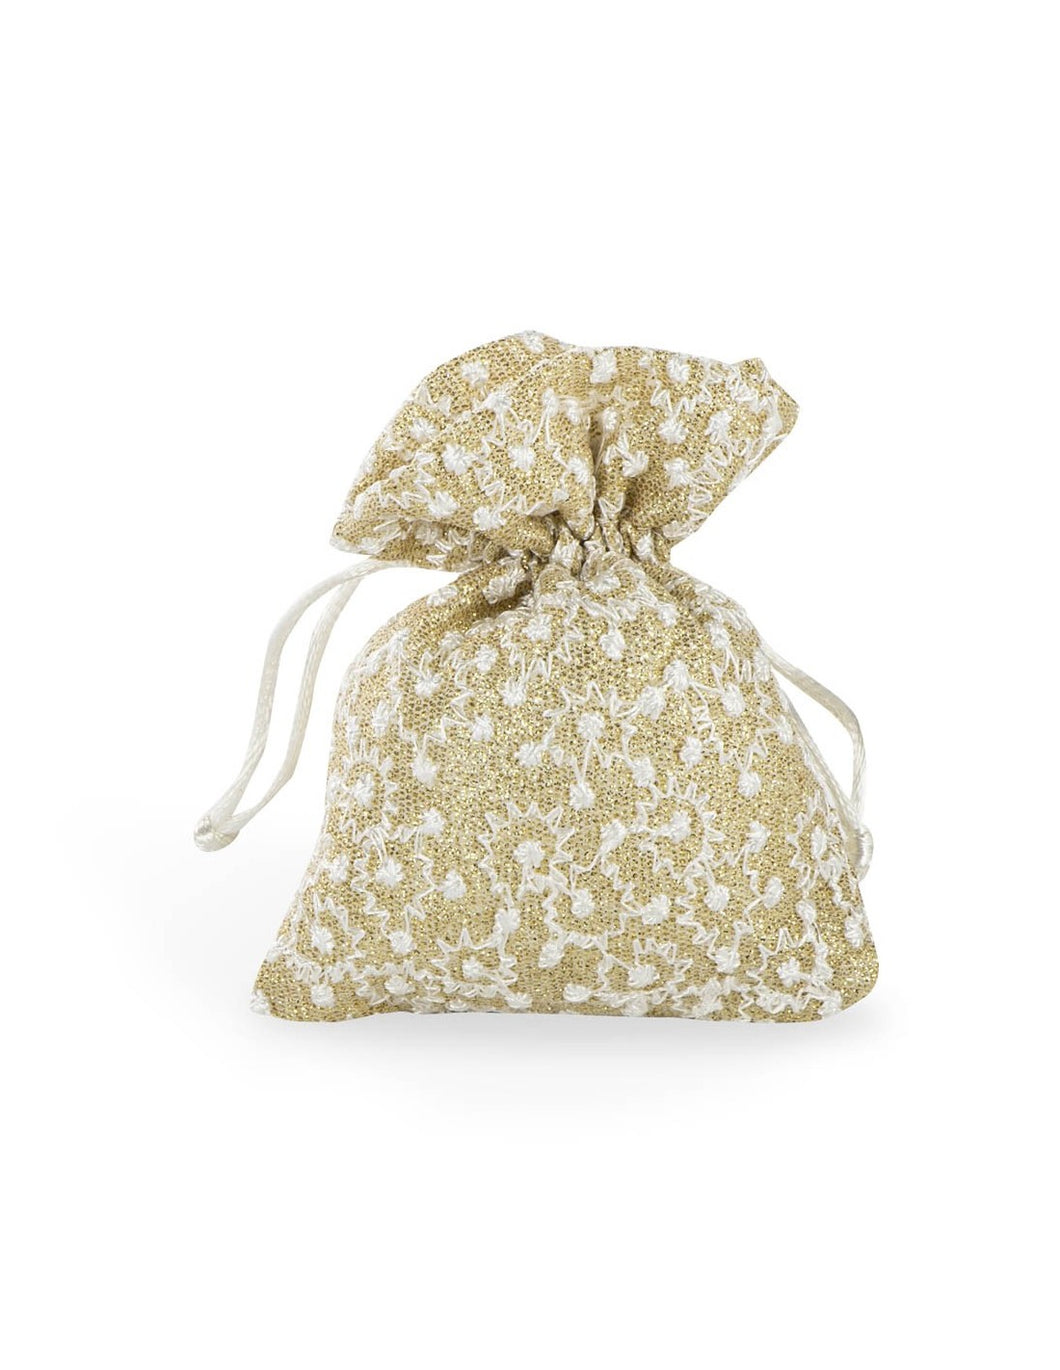 Embroidered Candy bag / wedding favor bag